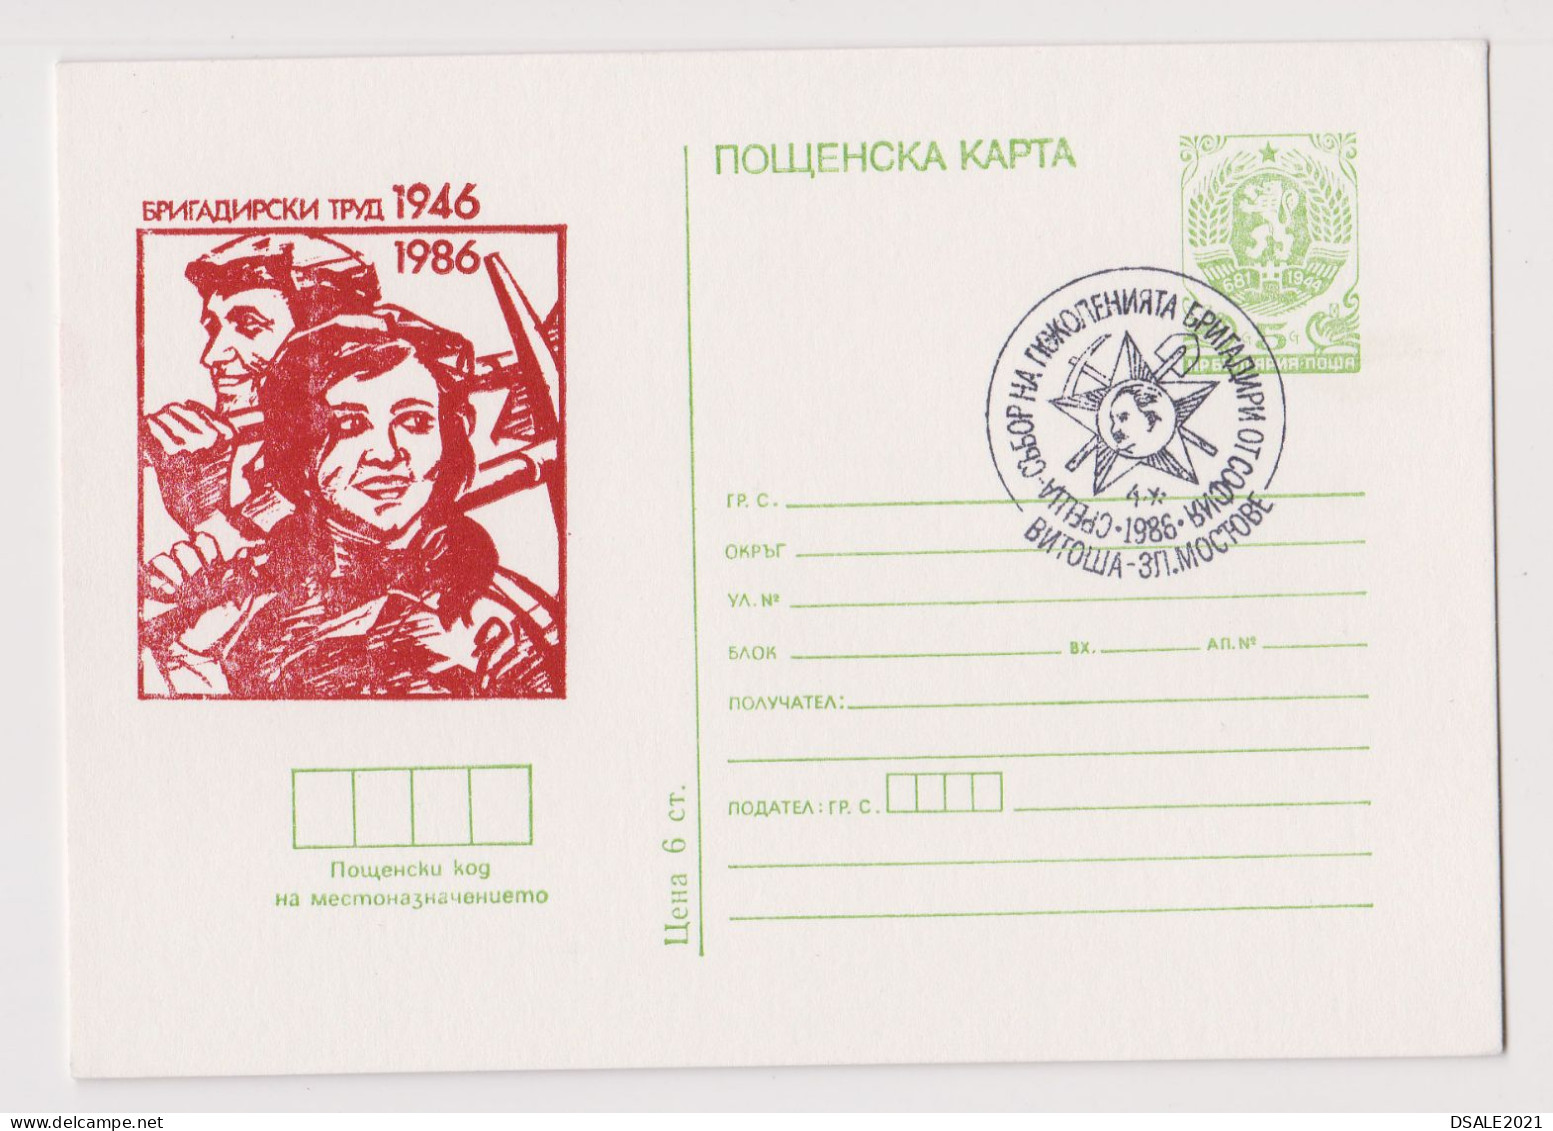 Bulgaria Bulgarie Bulgarien 1986 Postal Stationery Card, Ganzsachen, Entier, 1946 Bulgarian Youth Brigade Movement 67498 - Postkaarten